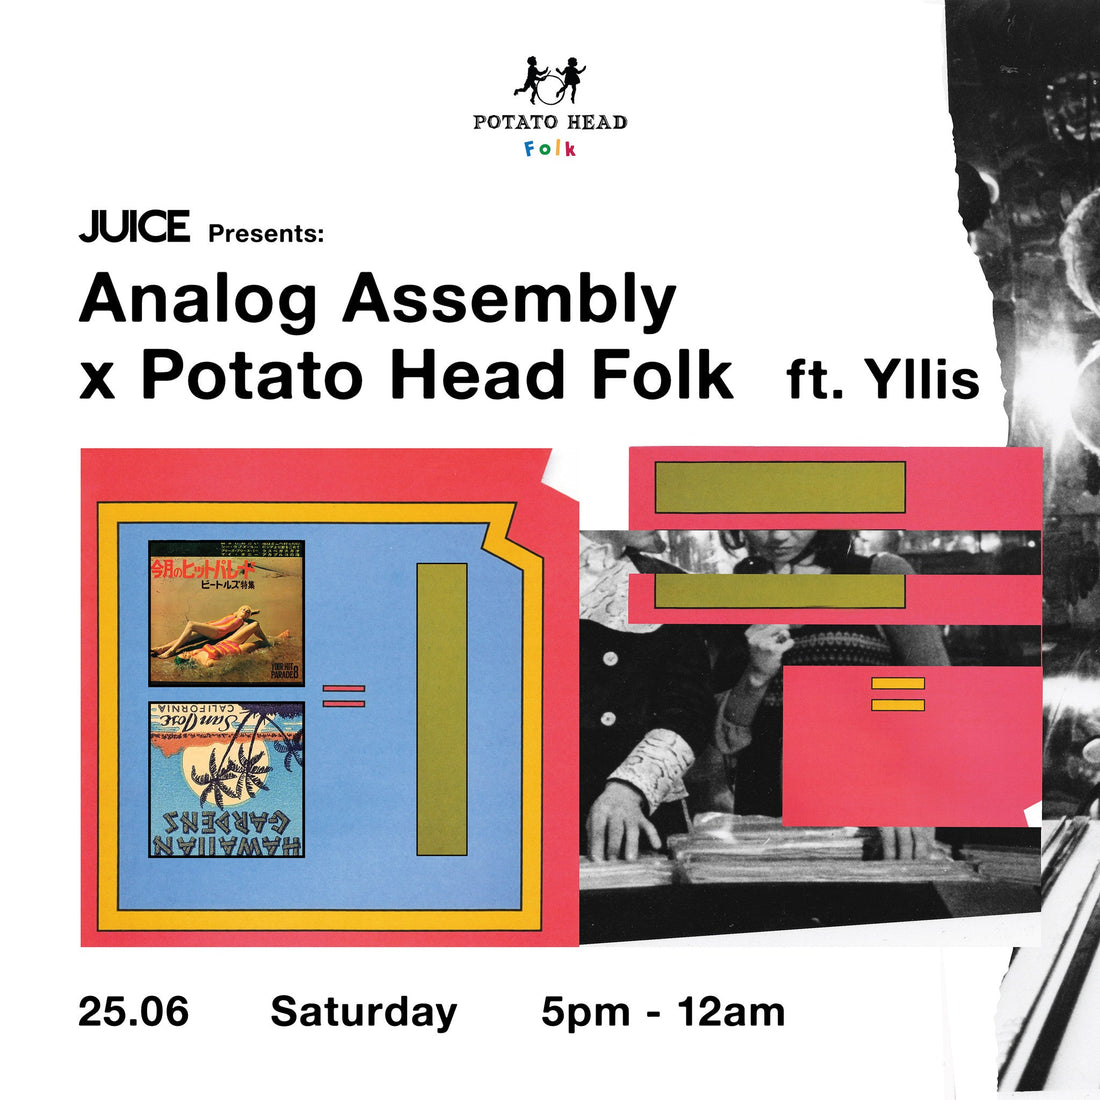 Juice Presents: Analog Assembly x Potato Head Folk ft. Yllis | 25th June 2016, Saturday